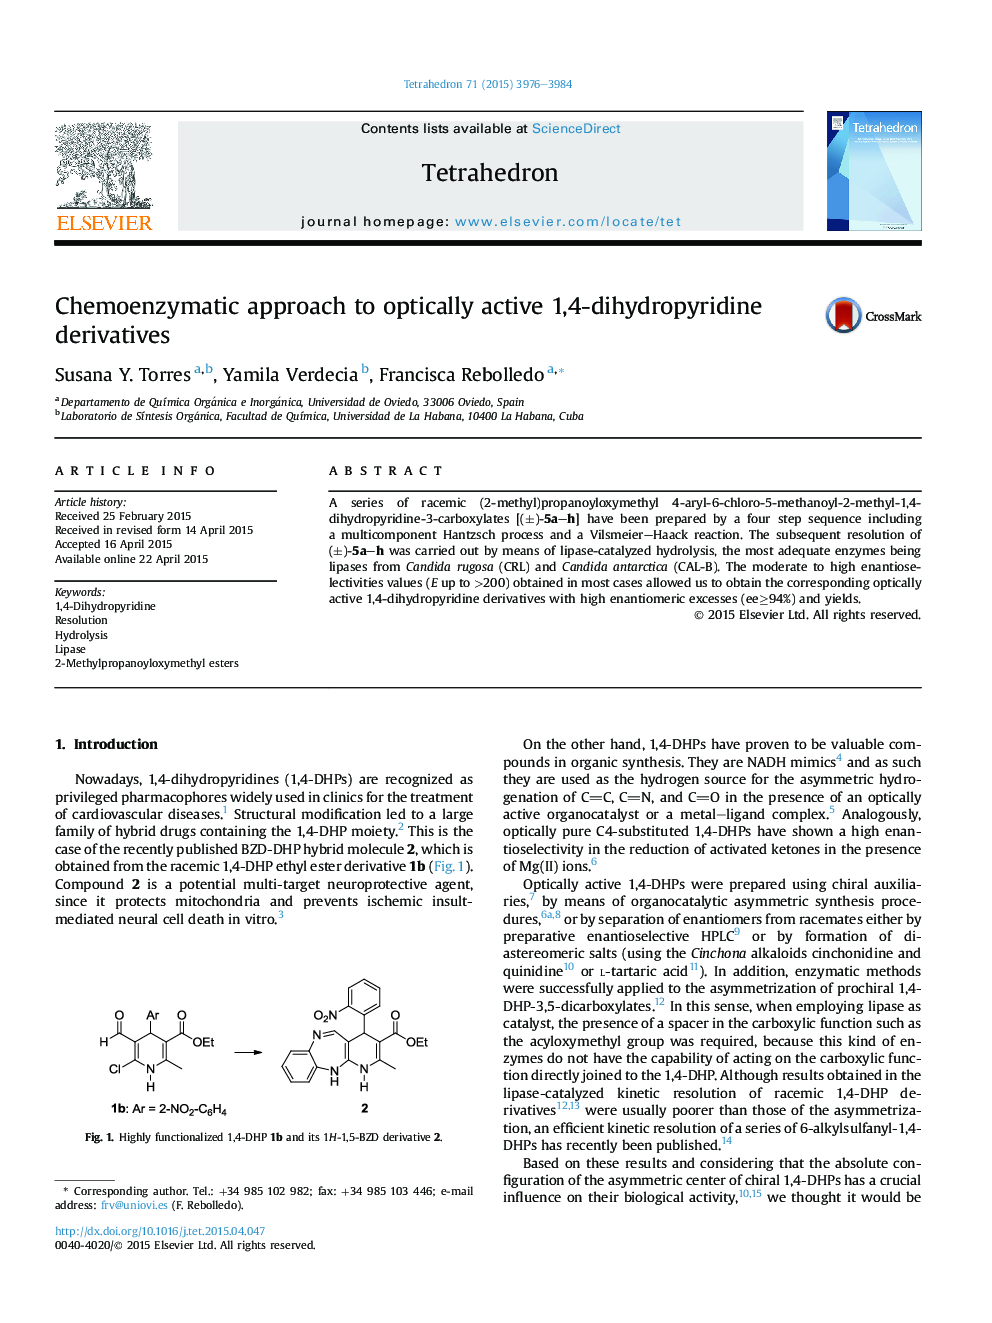 Chemoenzymatic approach to optically active 1,4-dihydropyridine derivatives